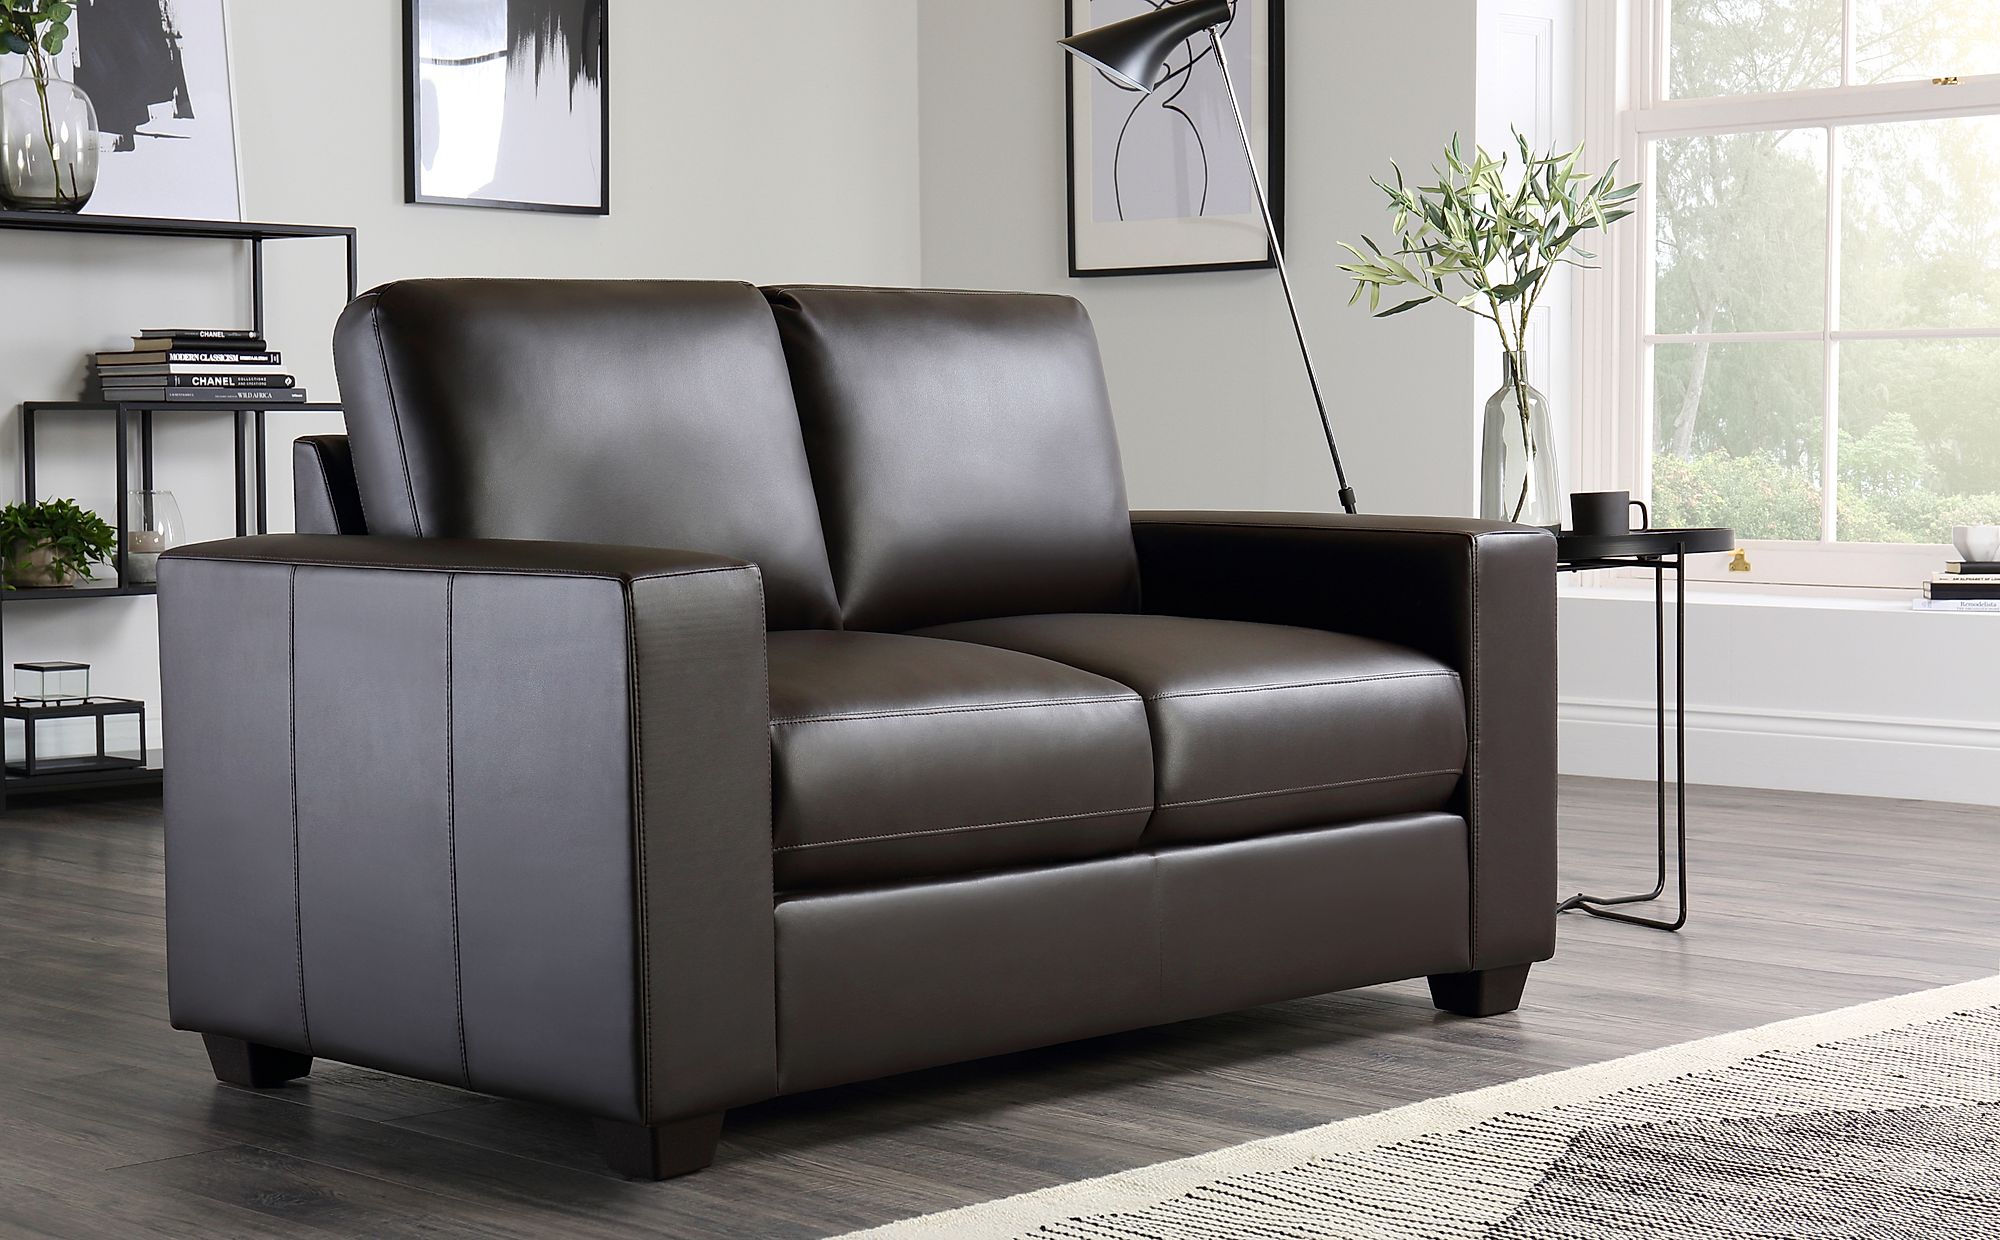 2 seater dark brown leather sofa